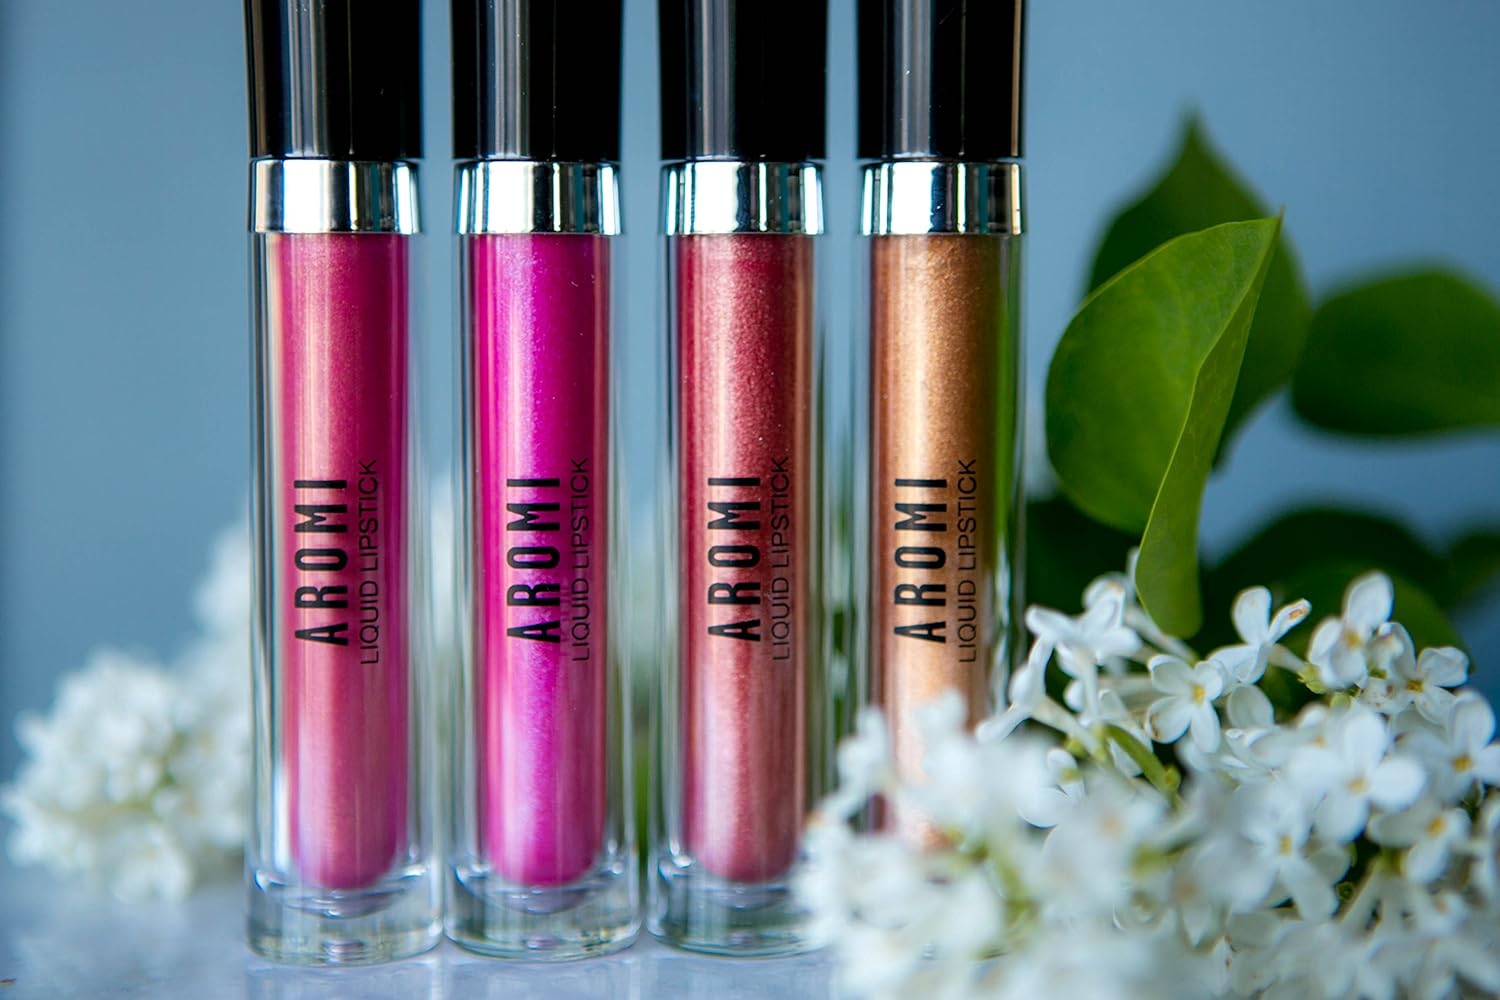 Aromi Hot Pink Metallic Matte Liquid Lipstick | Vibrant Magenta Lip Color with Shimmery Finish, Vegan, Cruelty-free, Waterproof, Long-Lasting (Fab Flamingo)